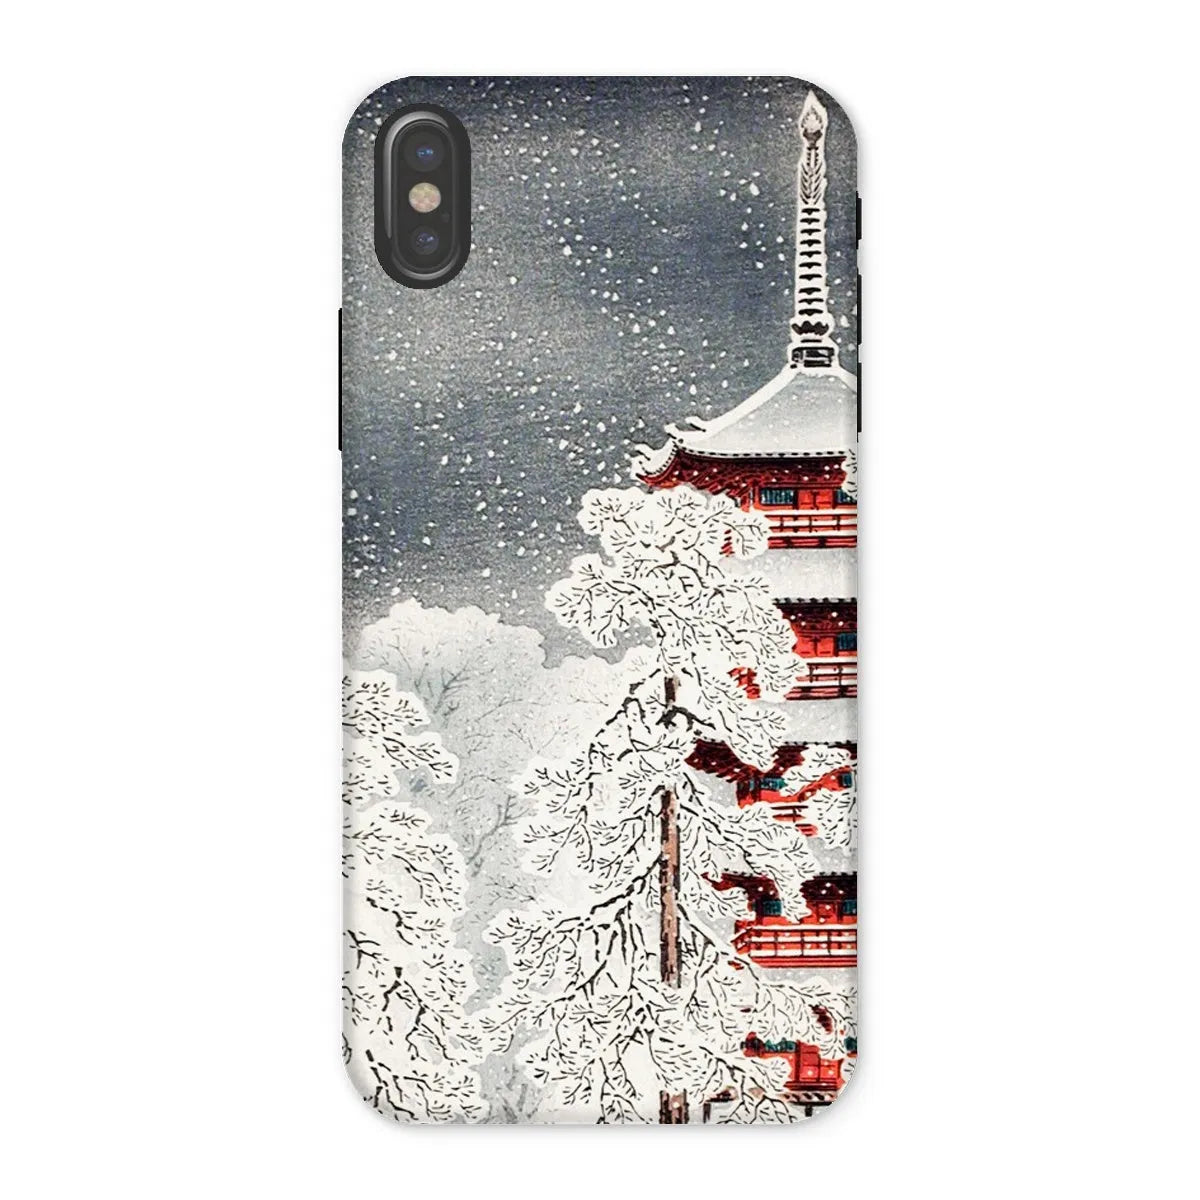 Snow At Asakusa - Shin-hanga Phone Case - Takahashi Shōtei - Iphone x / Matte - Mobile Phone Cases - Aesthetic Art